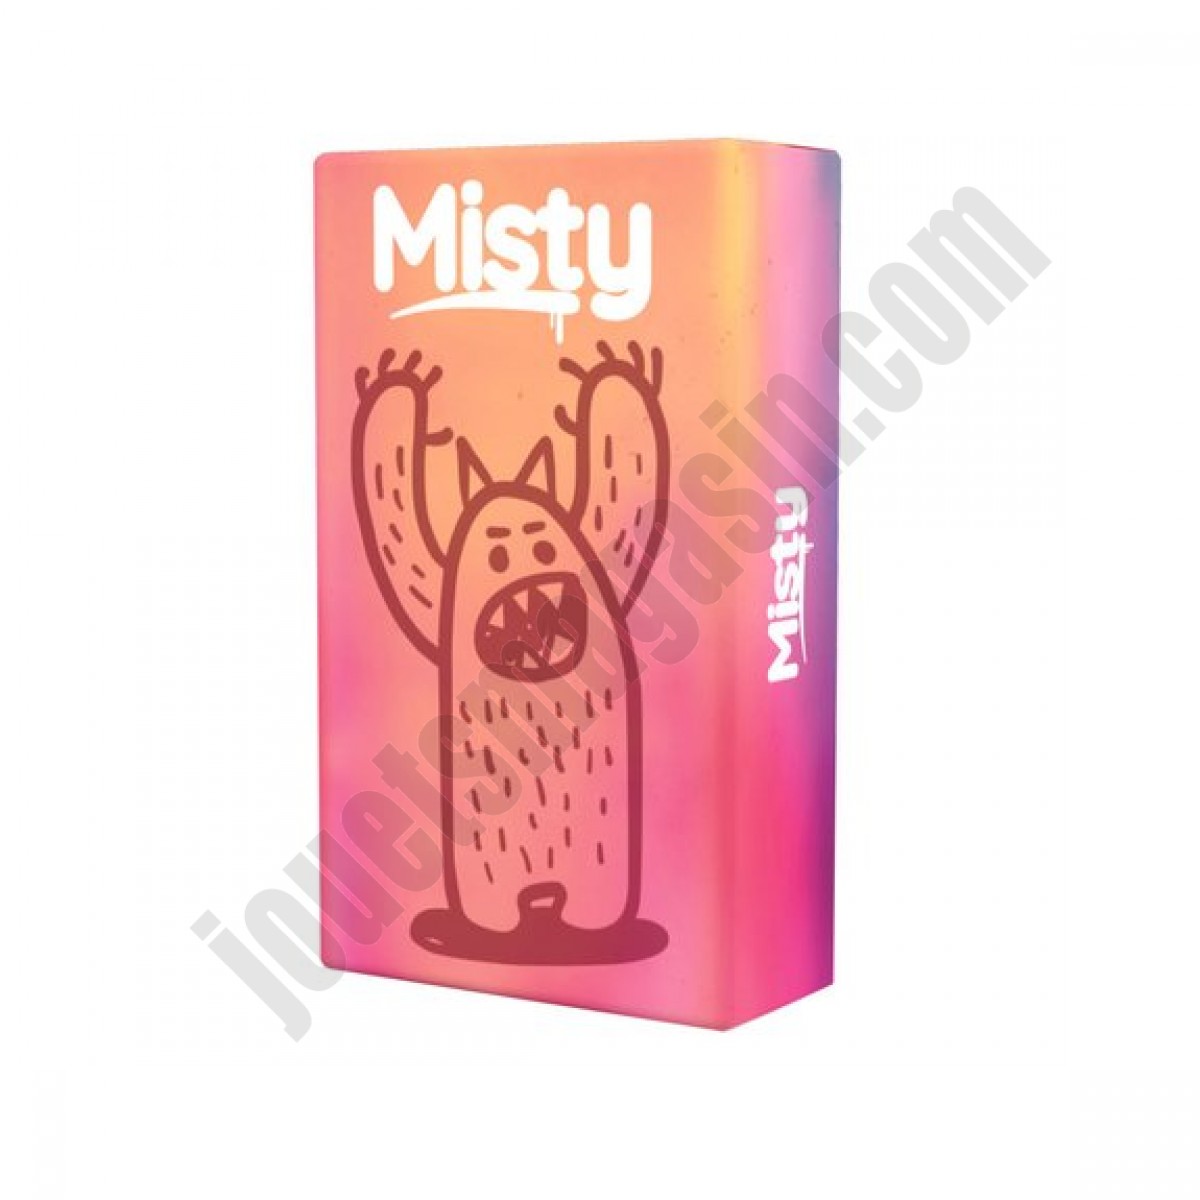 Misty ◆◆◆ Nouveau - Misty ◆◆◆ Nouveau